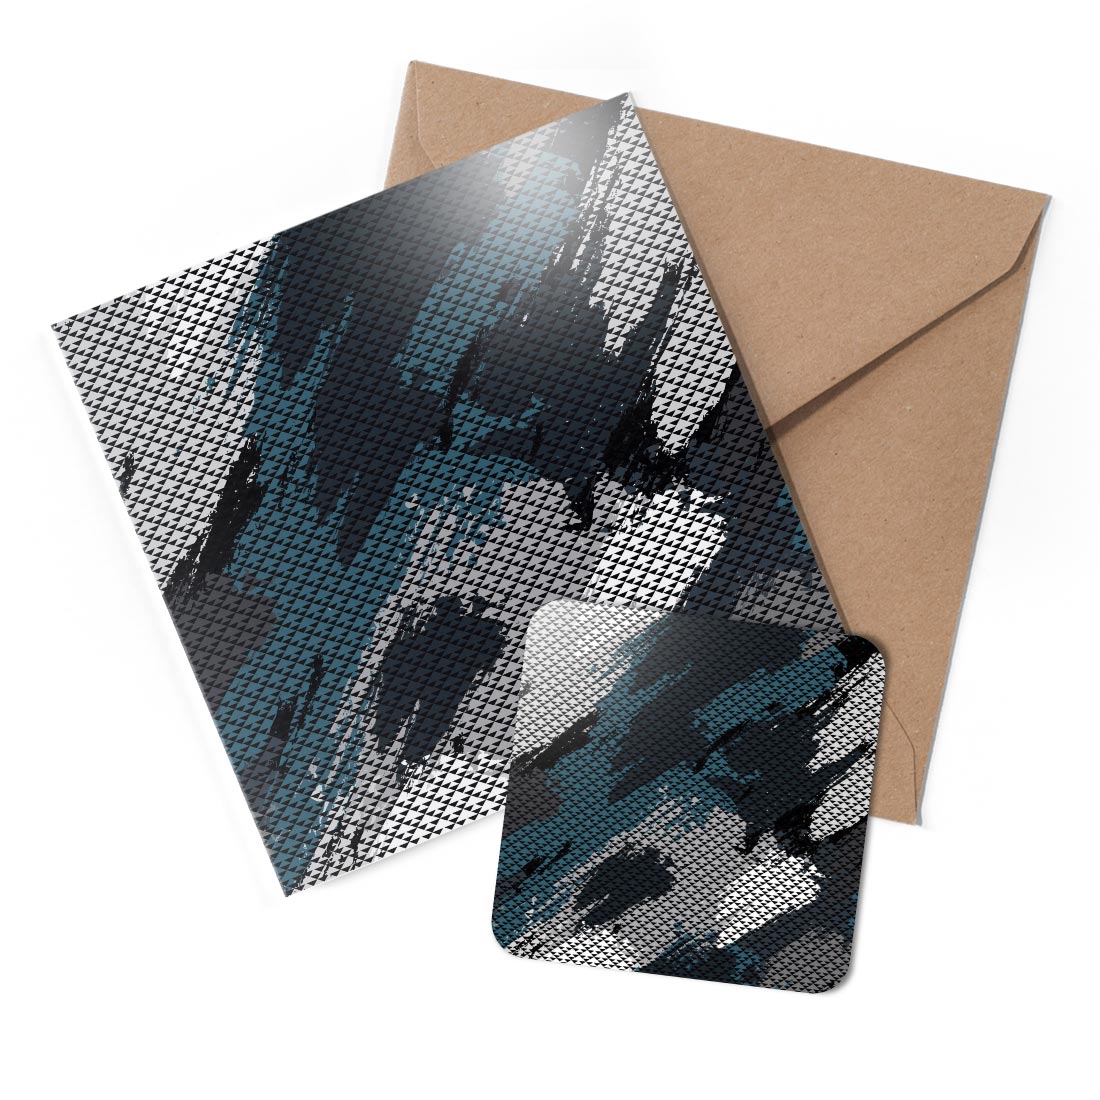 1 x Greeting Card & Coaster Set - Abstract Camo Tech Modern Pattern #52572